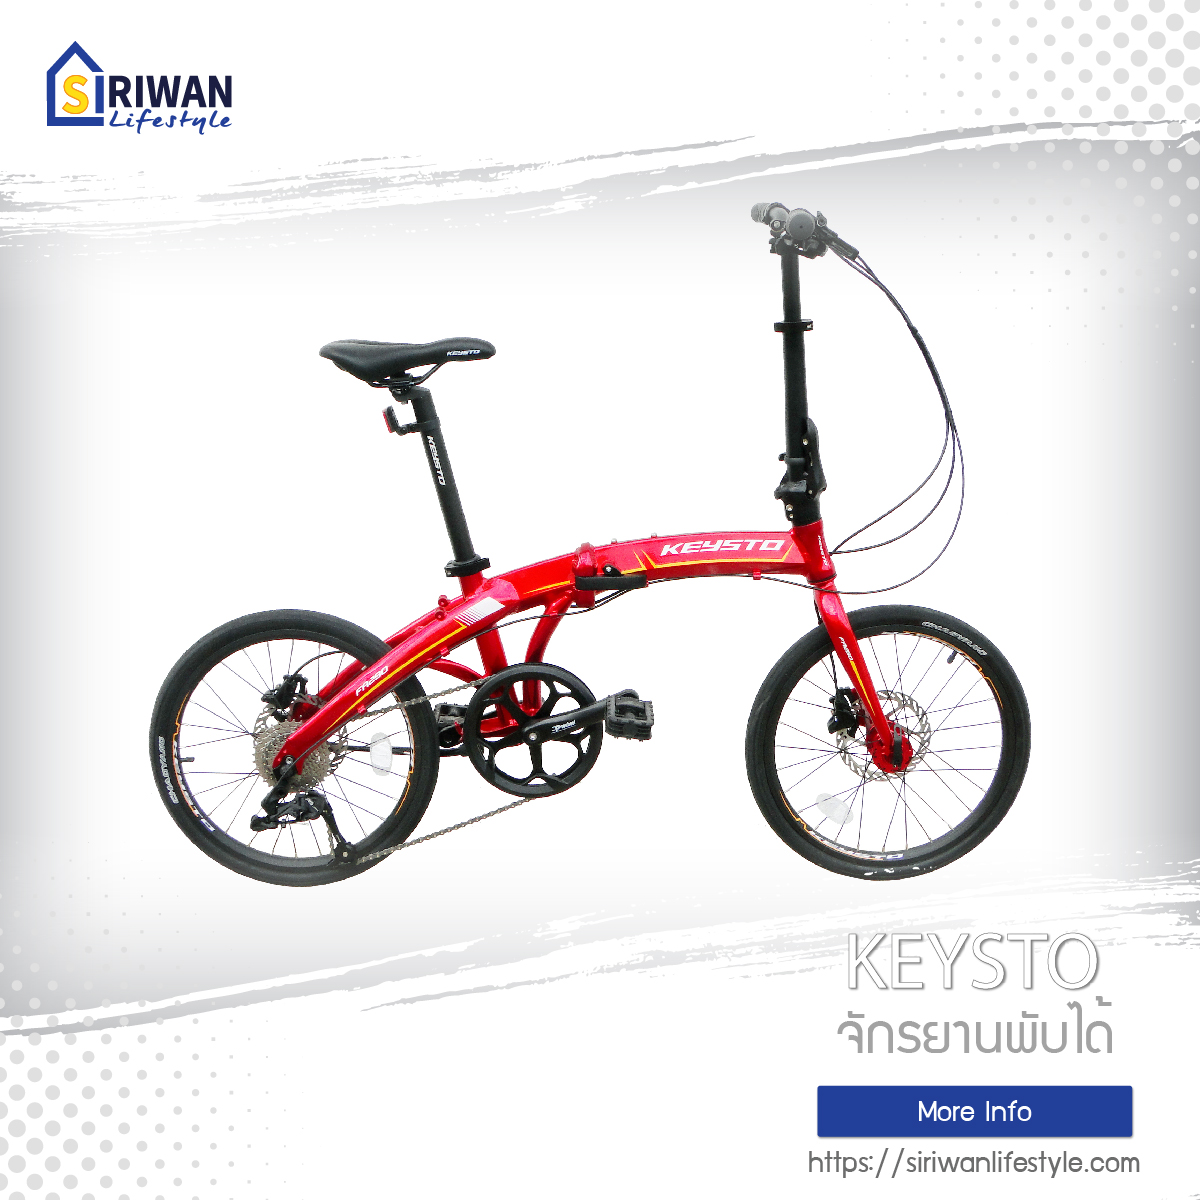 KEYSTO จักรยานพับได้ 20 นิ้วเกียร์ 9 สปีด HYDR.เฟรมอลูมิเนีย ไซร์12.5 น้ำหนัก 13 กก.รุ่น FA290 (ปี2020)